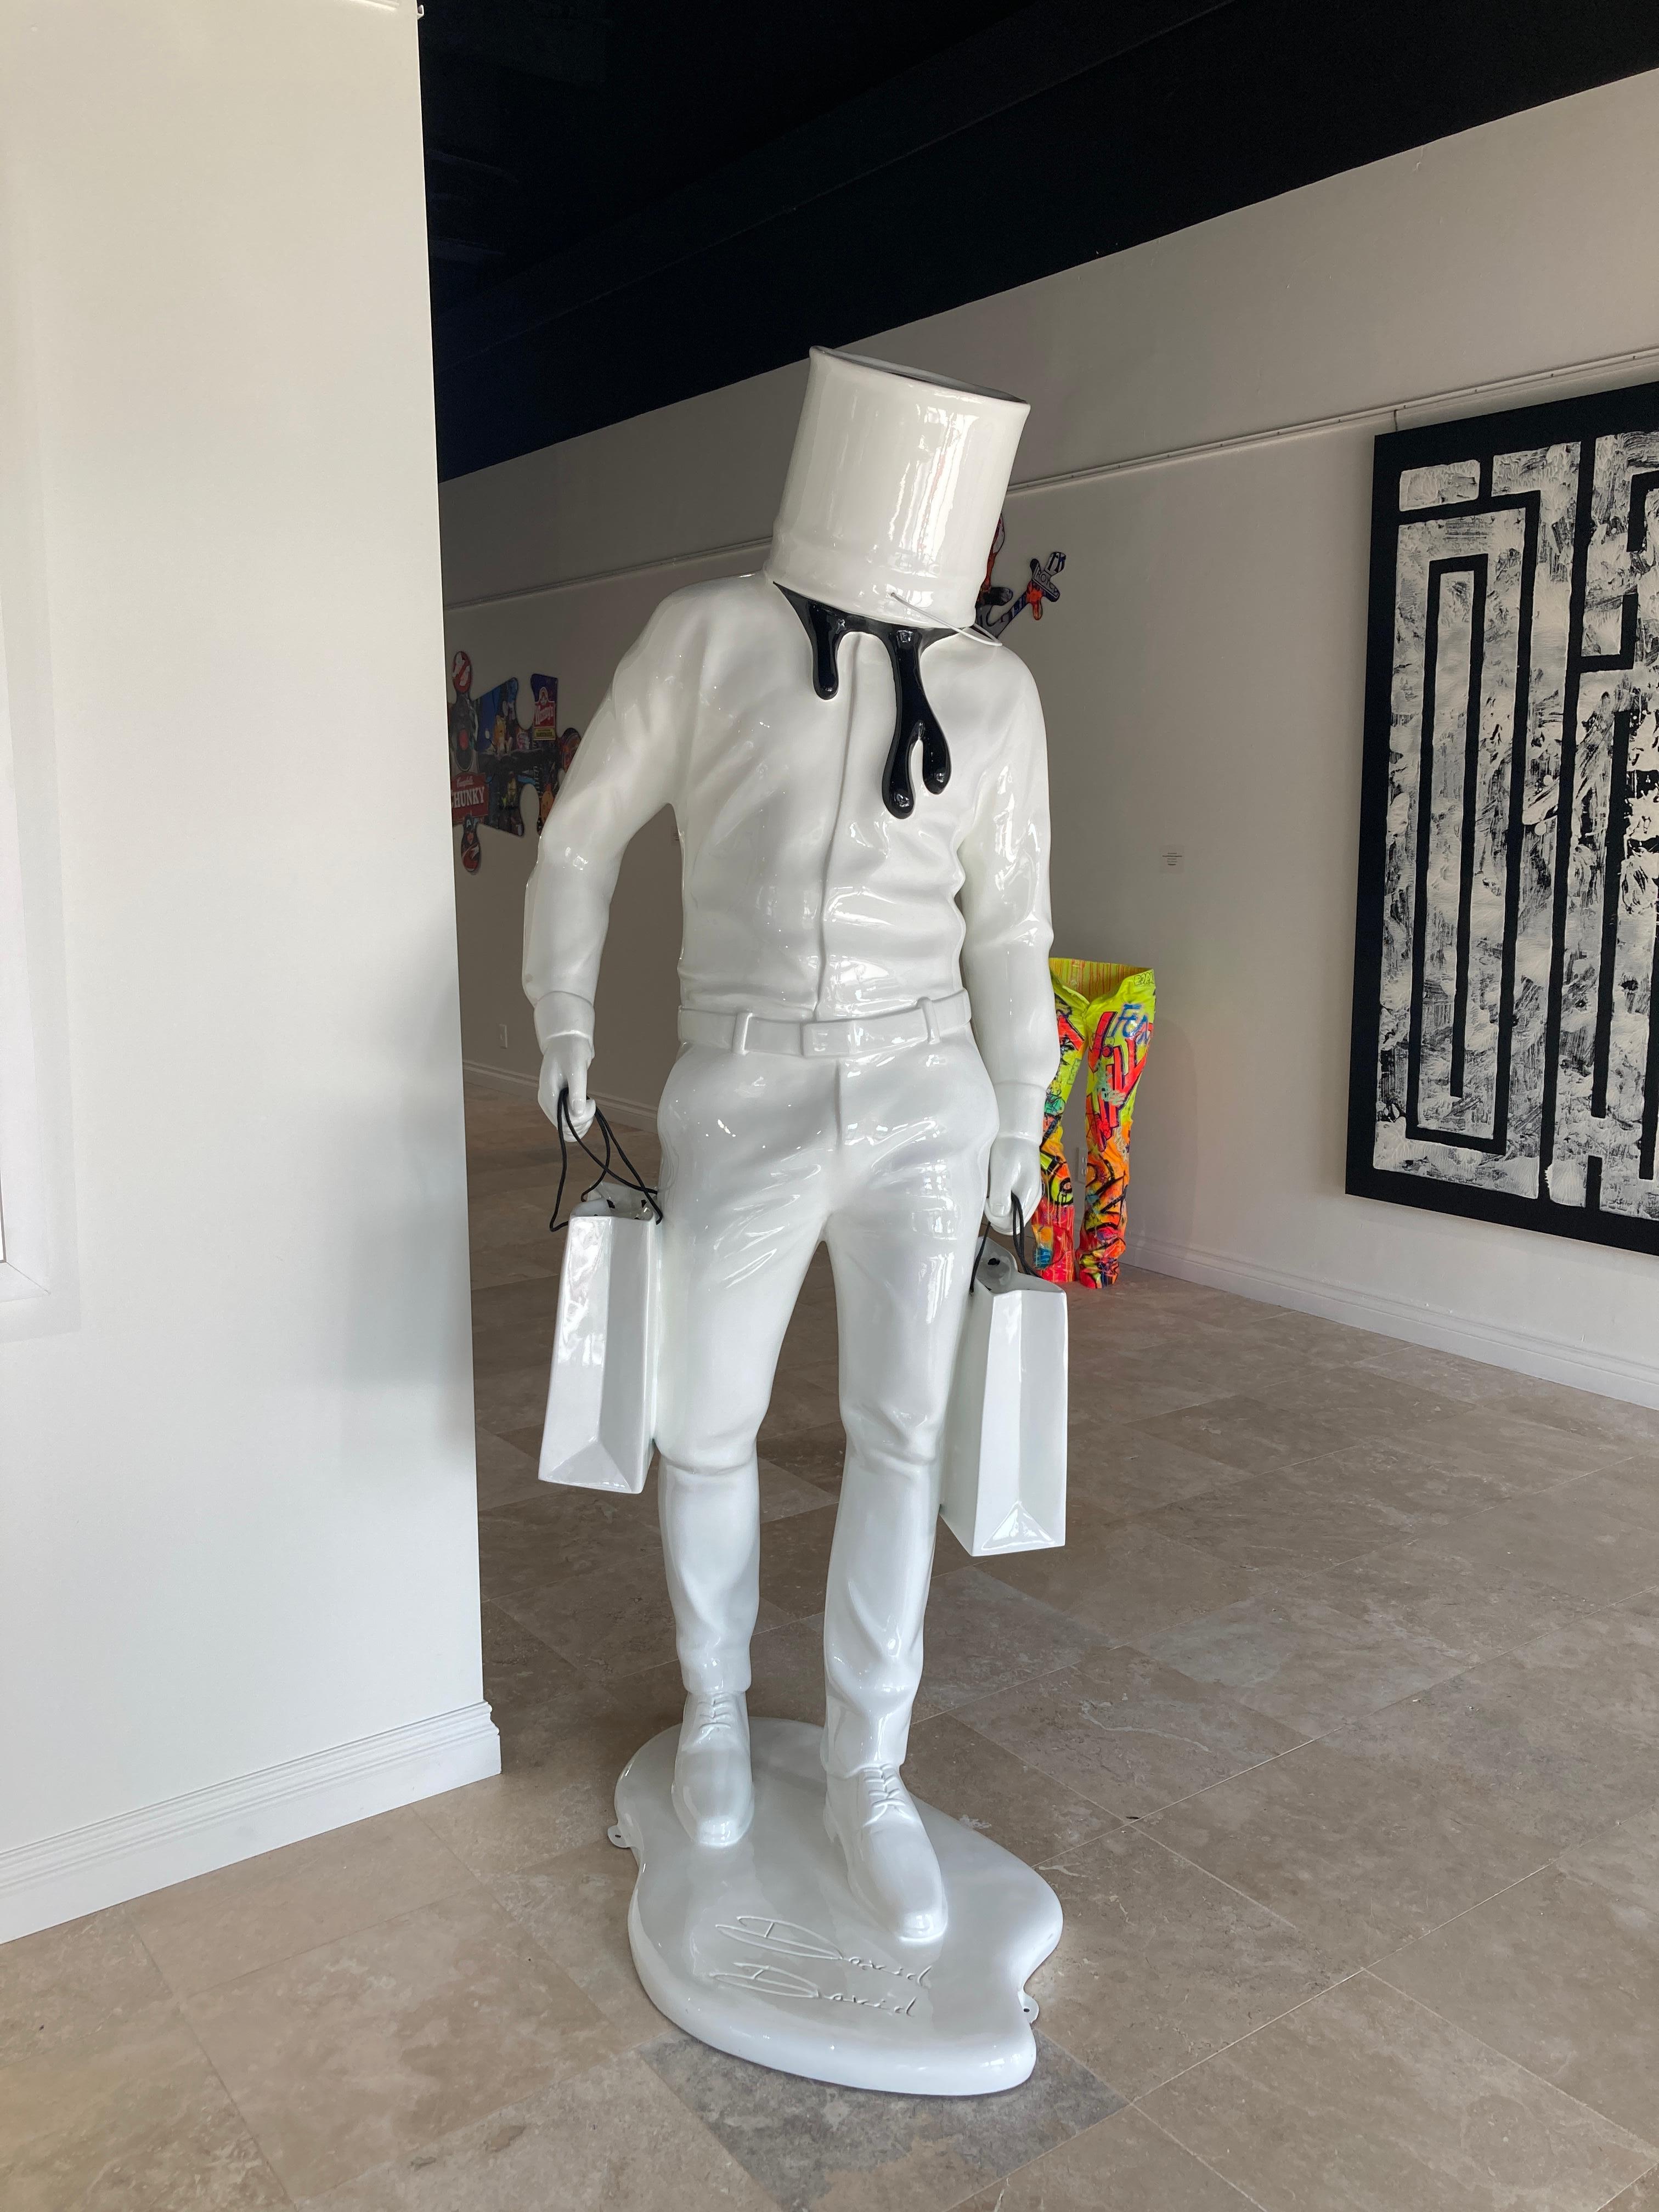 David David Figurative Sculpture - Shopping Man in Art - Blanc et Noir 